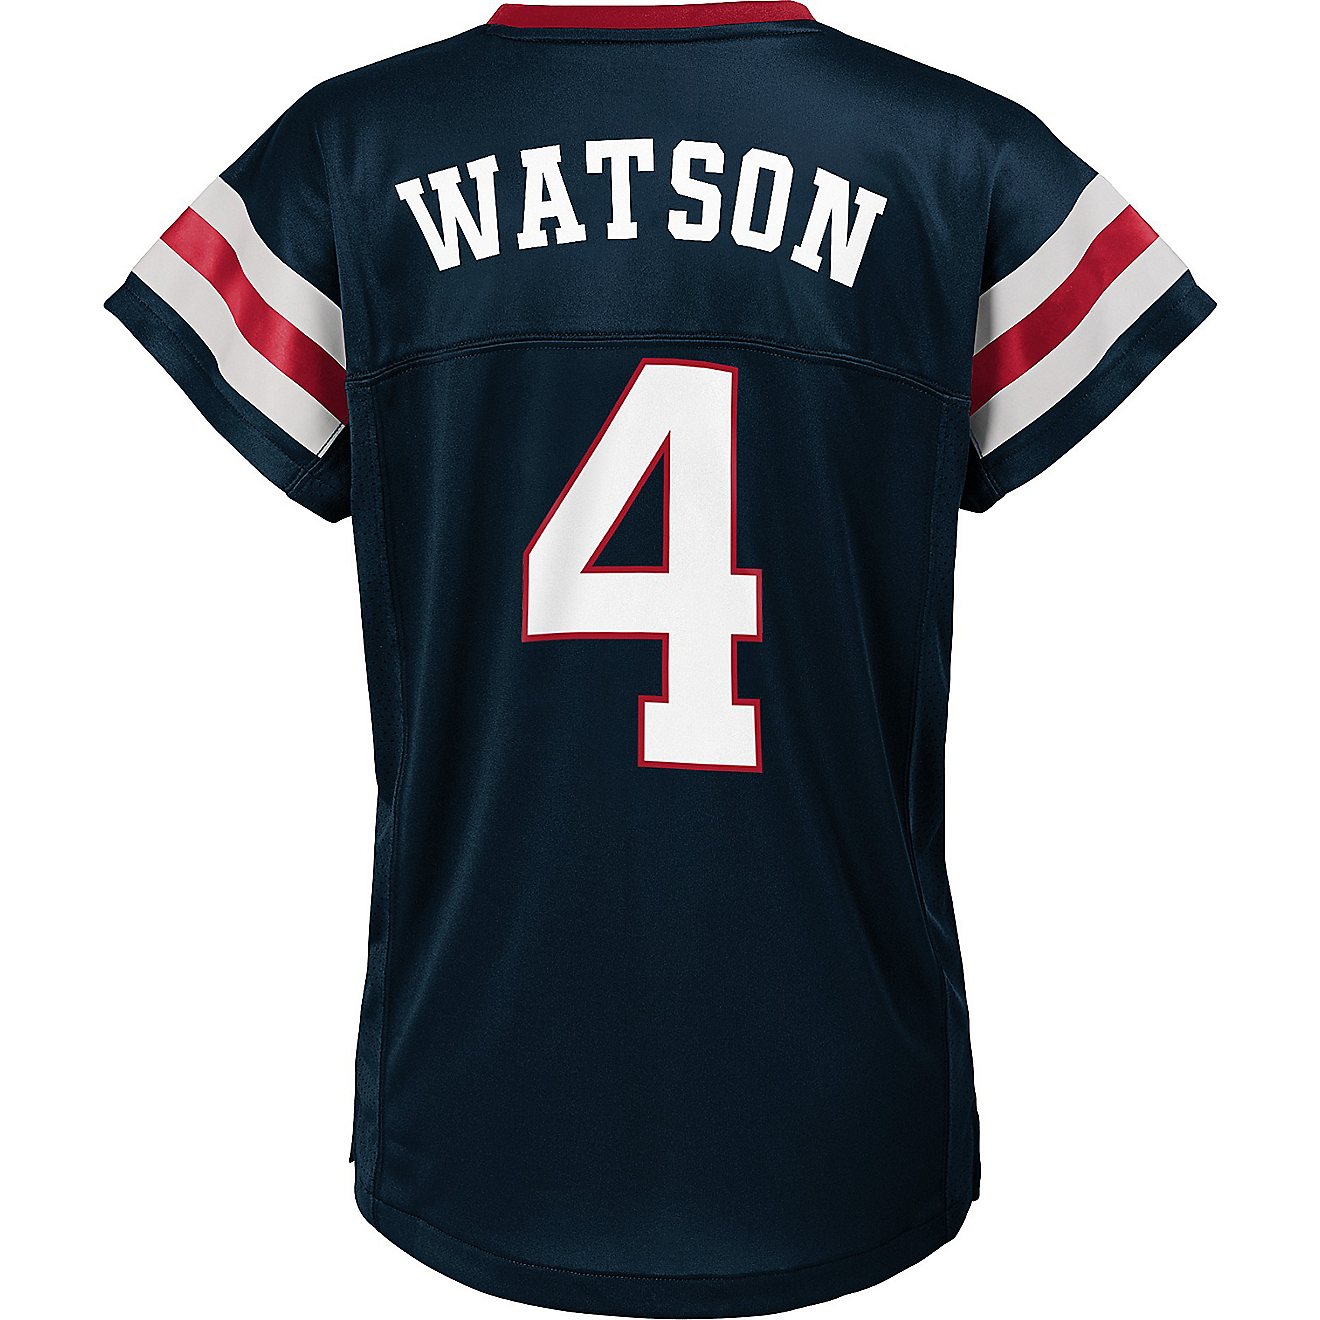 NFL Girls’ Houston Texans Fashion Fan Gear T-shirt                                                                             - view number 3